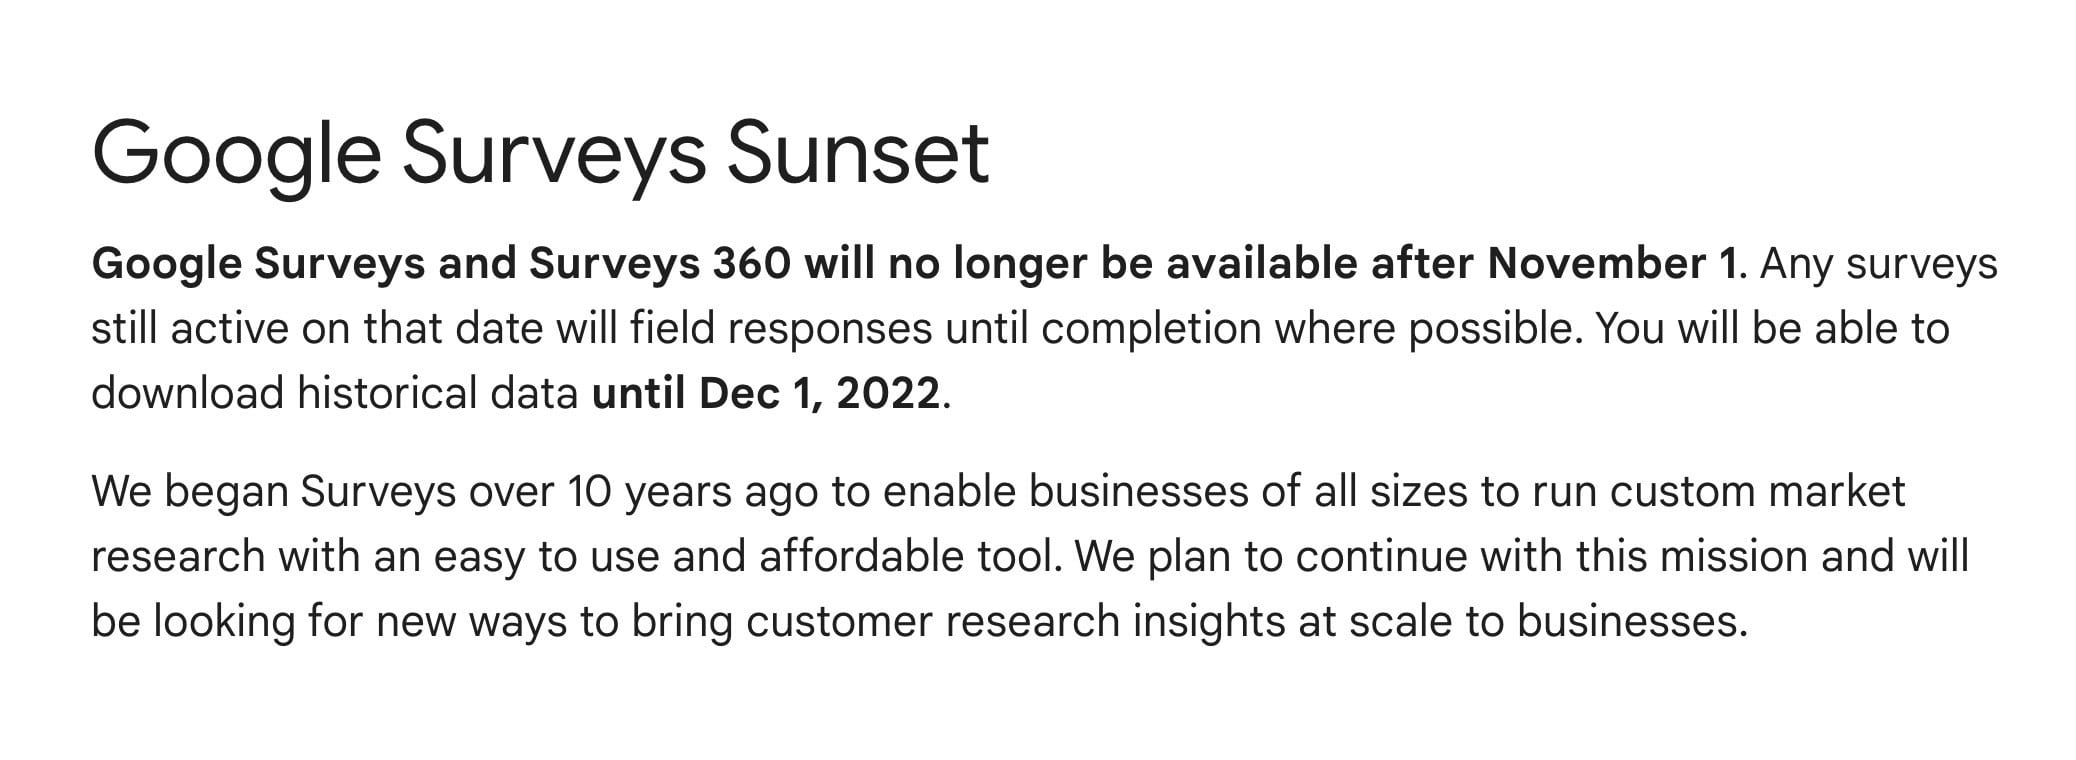 Google Surveys Sunset